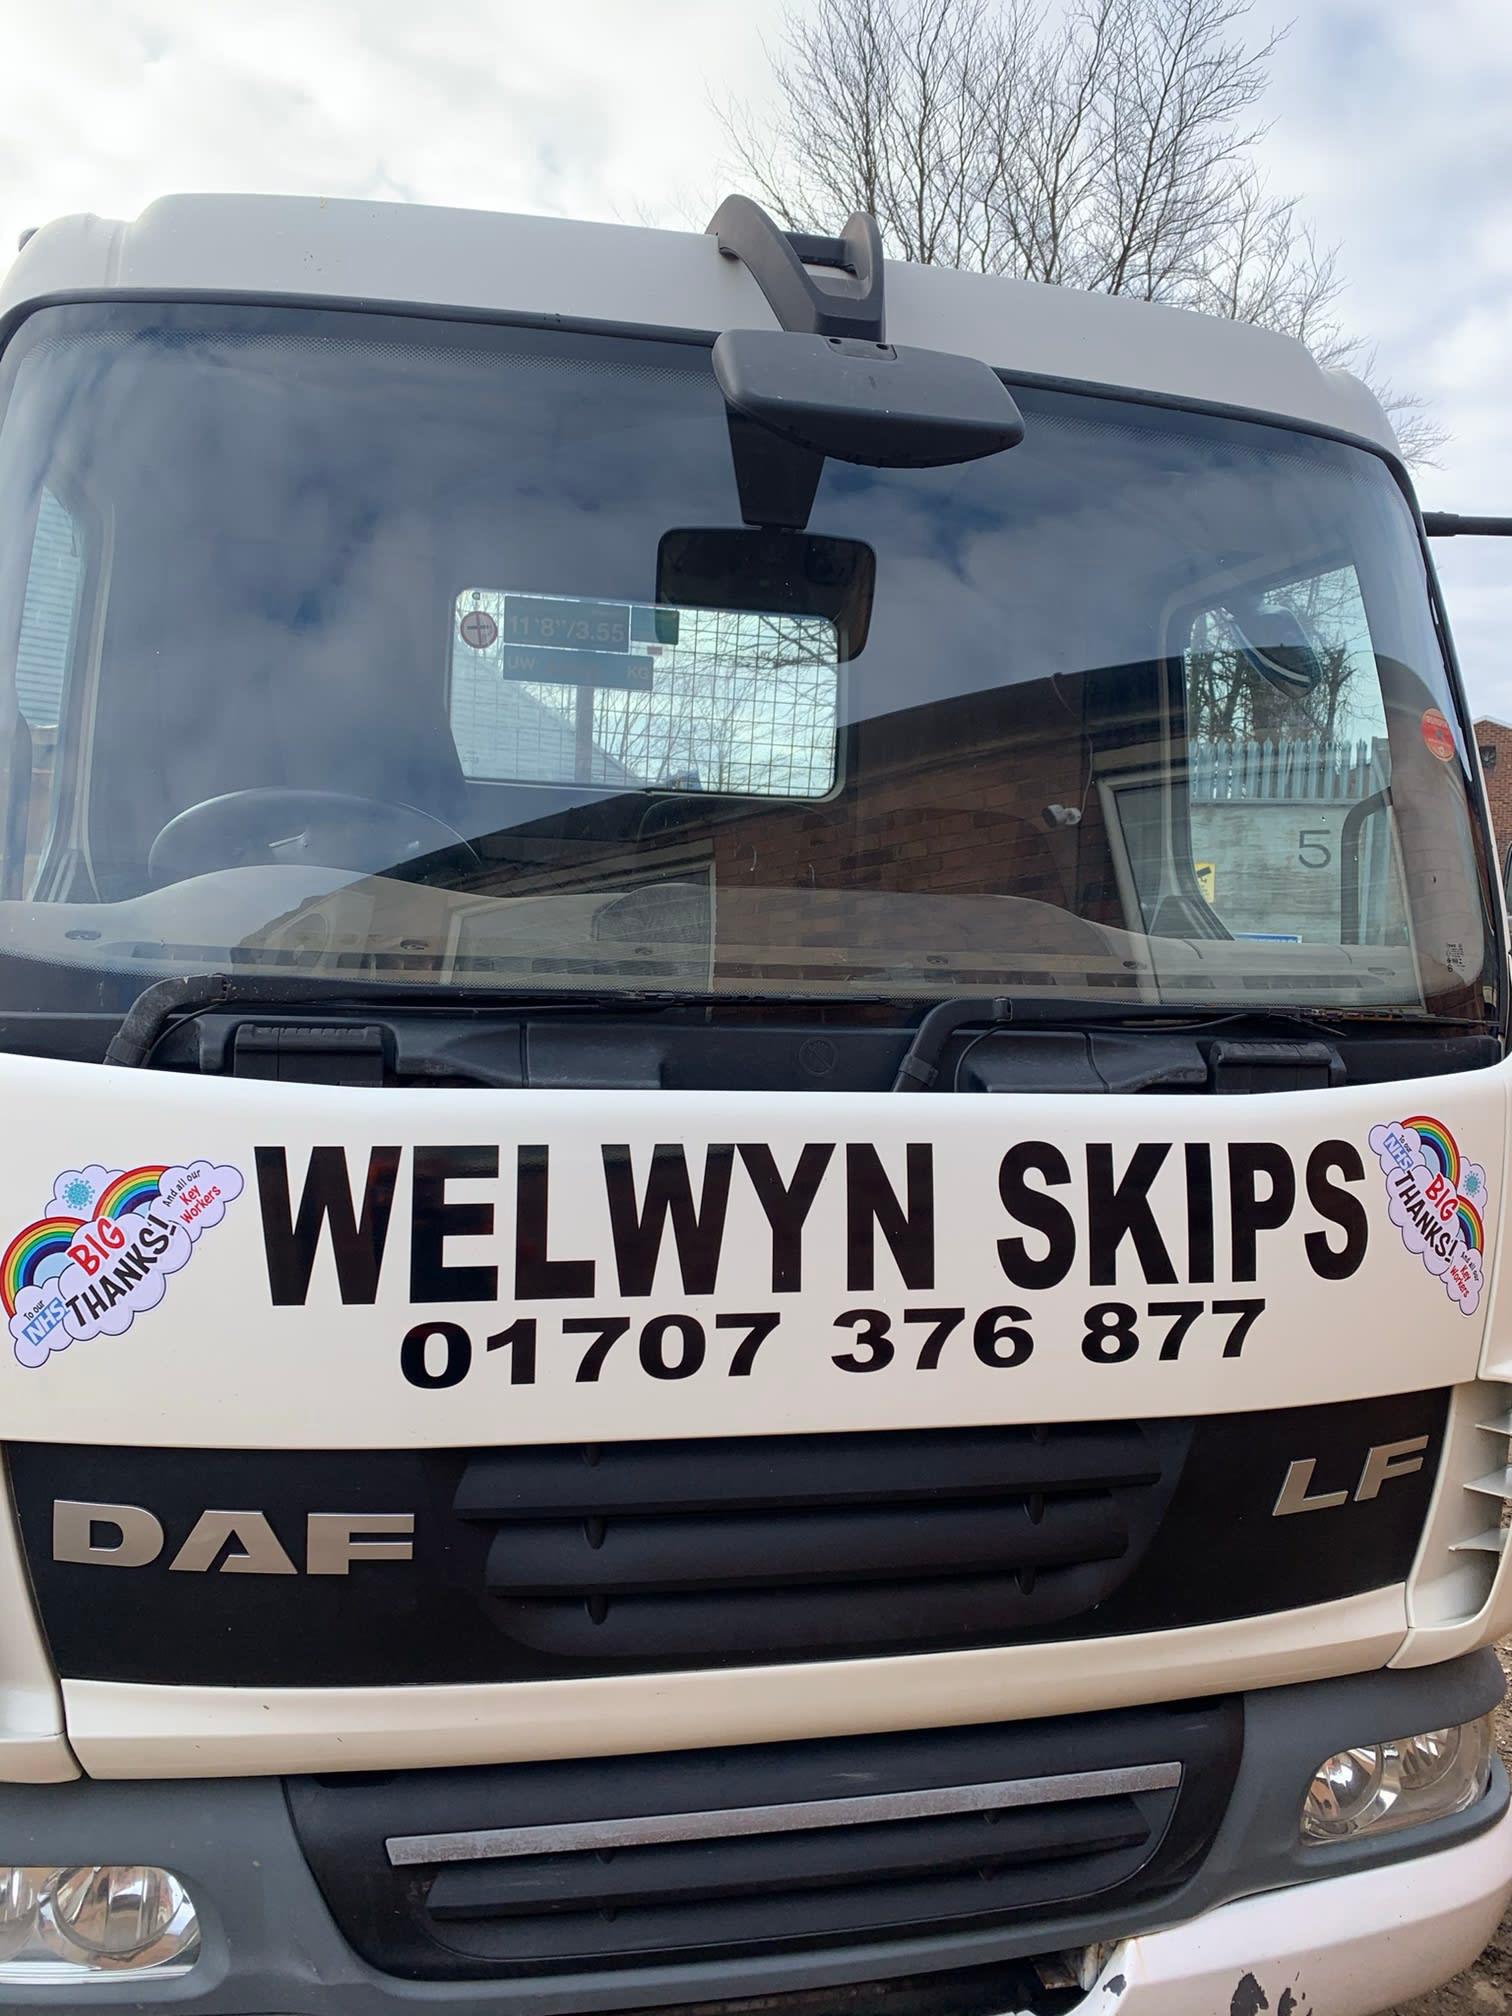 Images Welwyn Skips Ltd